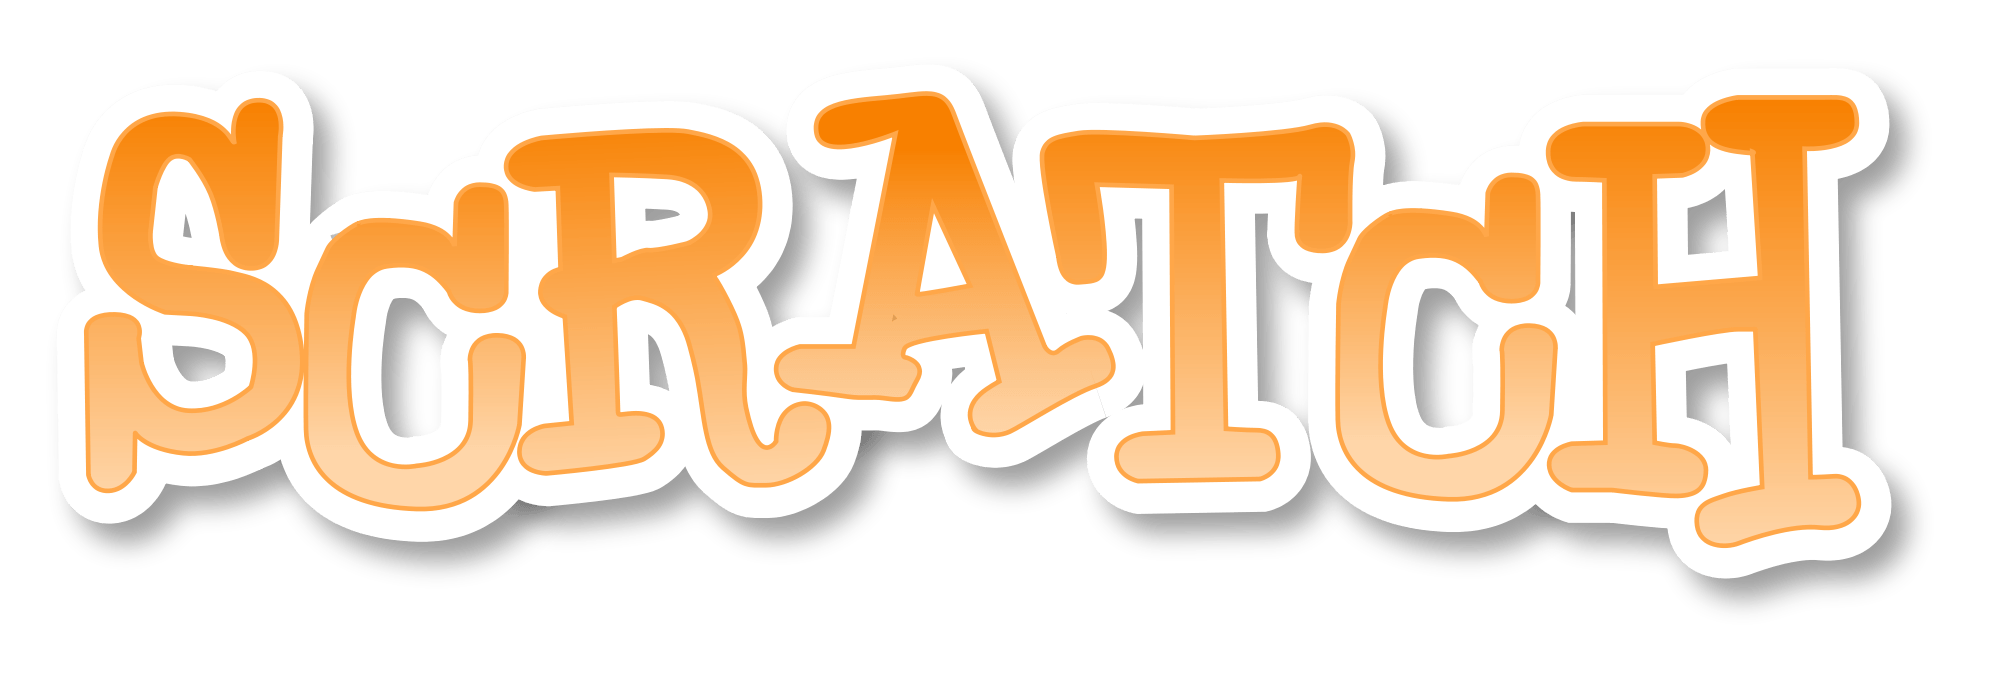 Scratch.mit.edu Logo - Scratch Logos